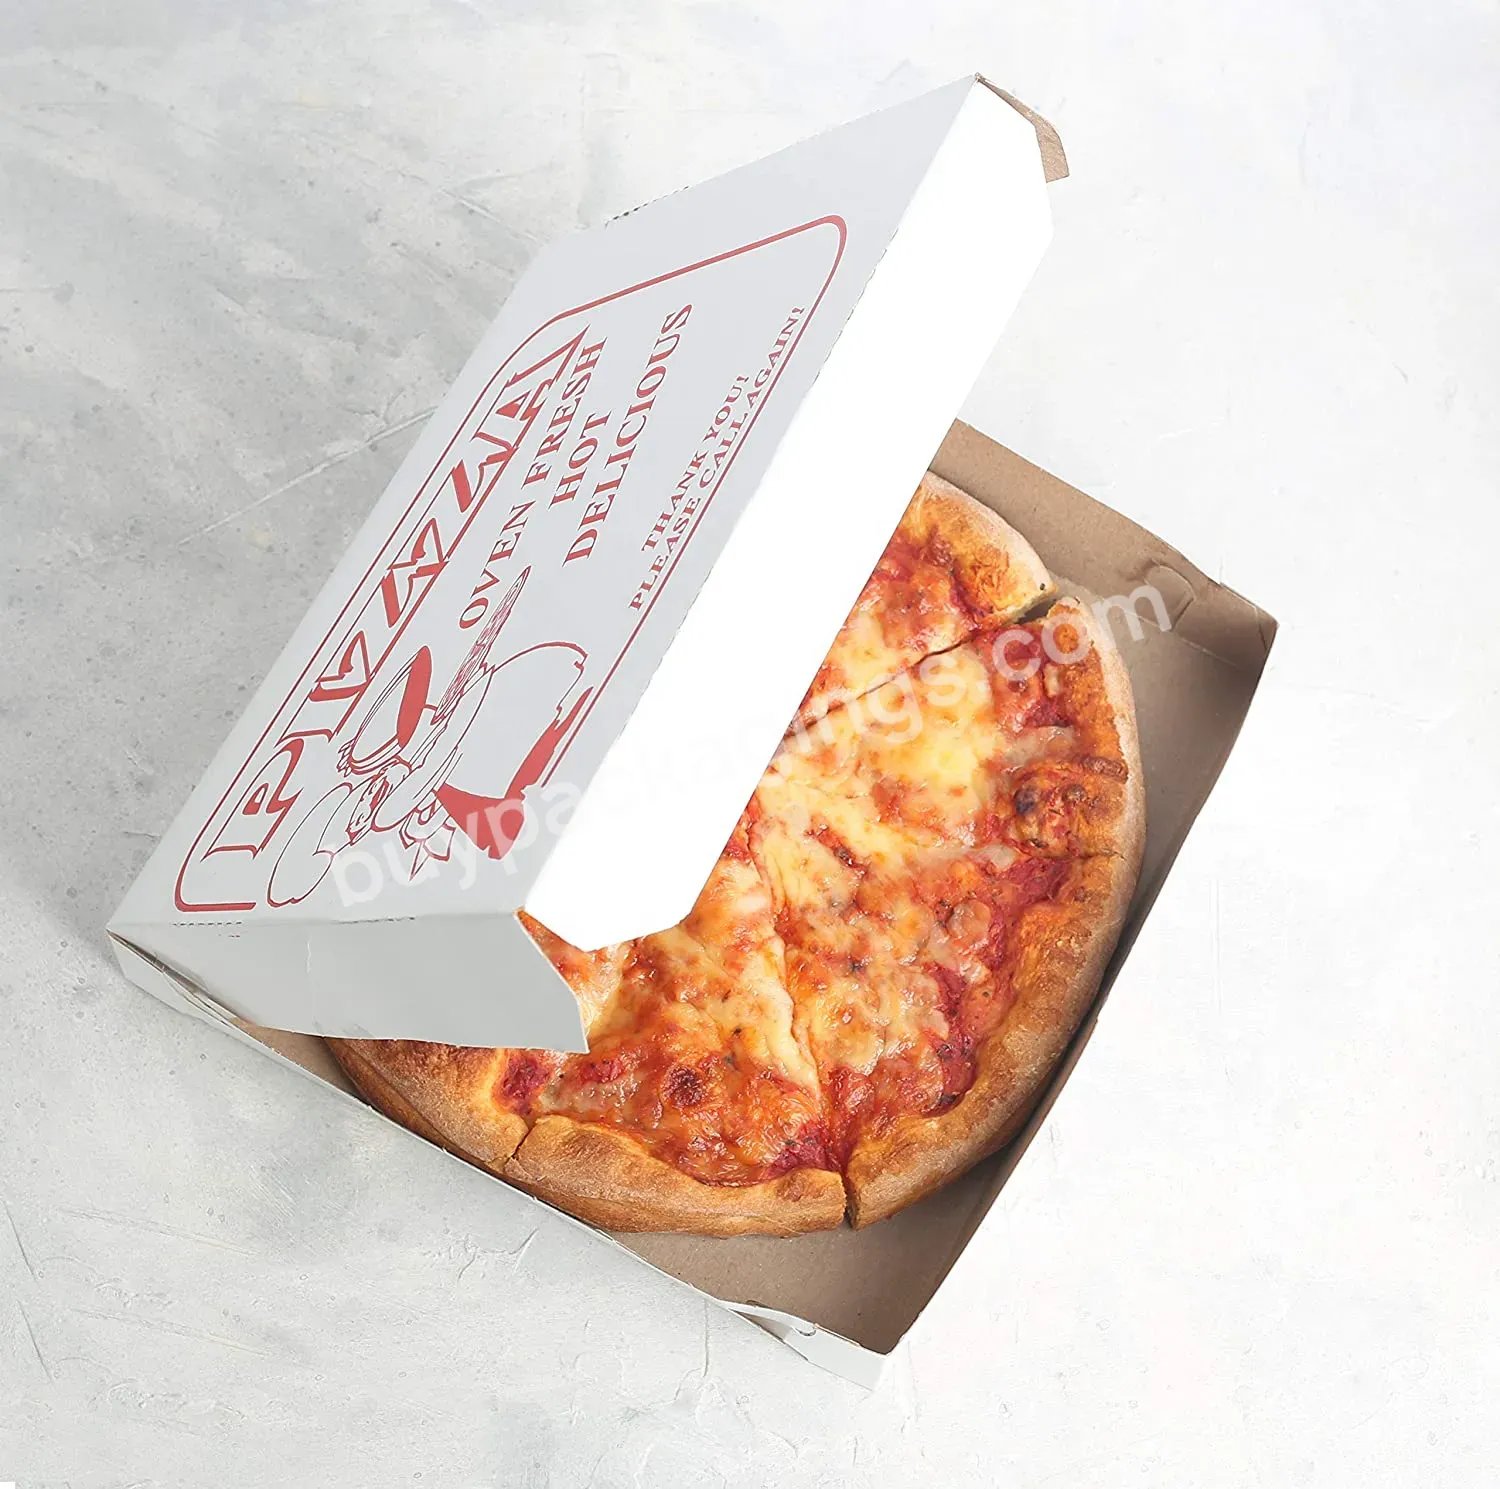 Personalizados Homemade Cartoon Box Caixa De Pizza Verpackung Packaginf - Buy Pizza Verpackung,Personalizados Pizza,Helper For Baking Kitchen Tool.